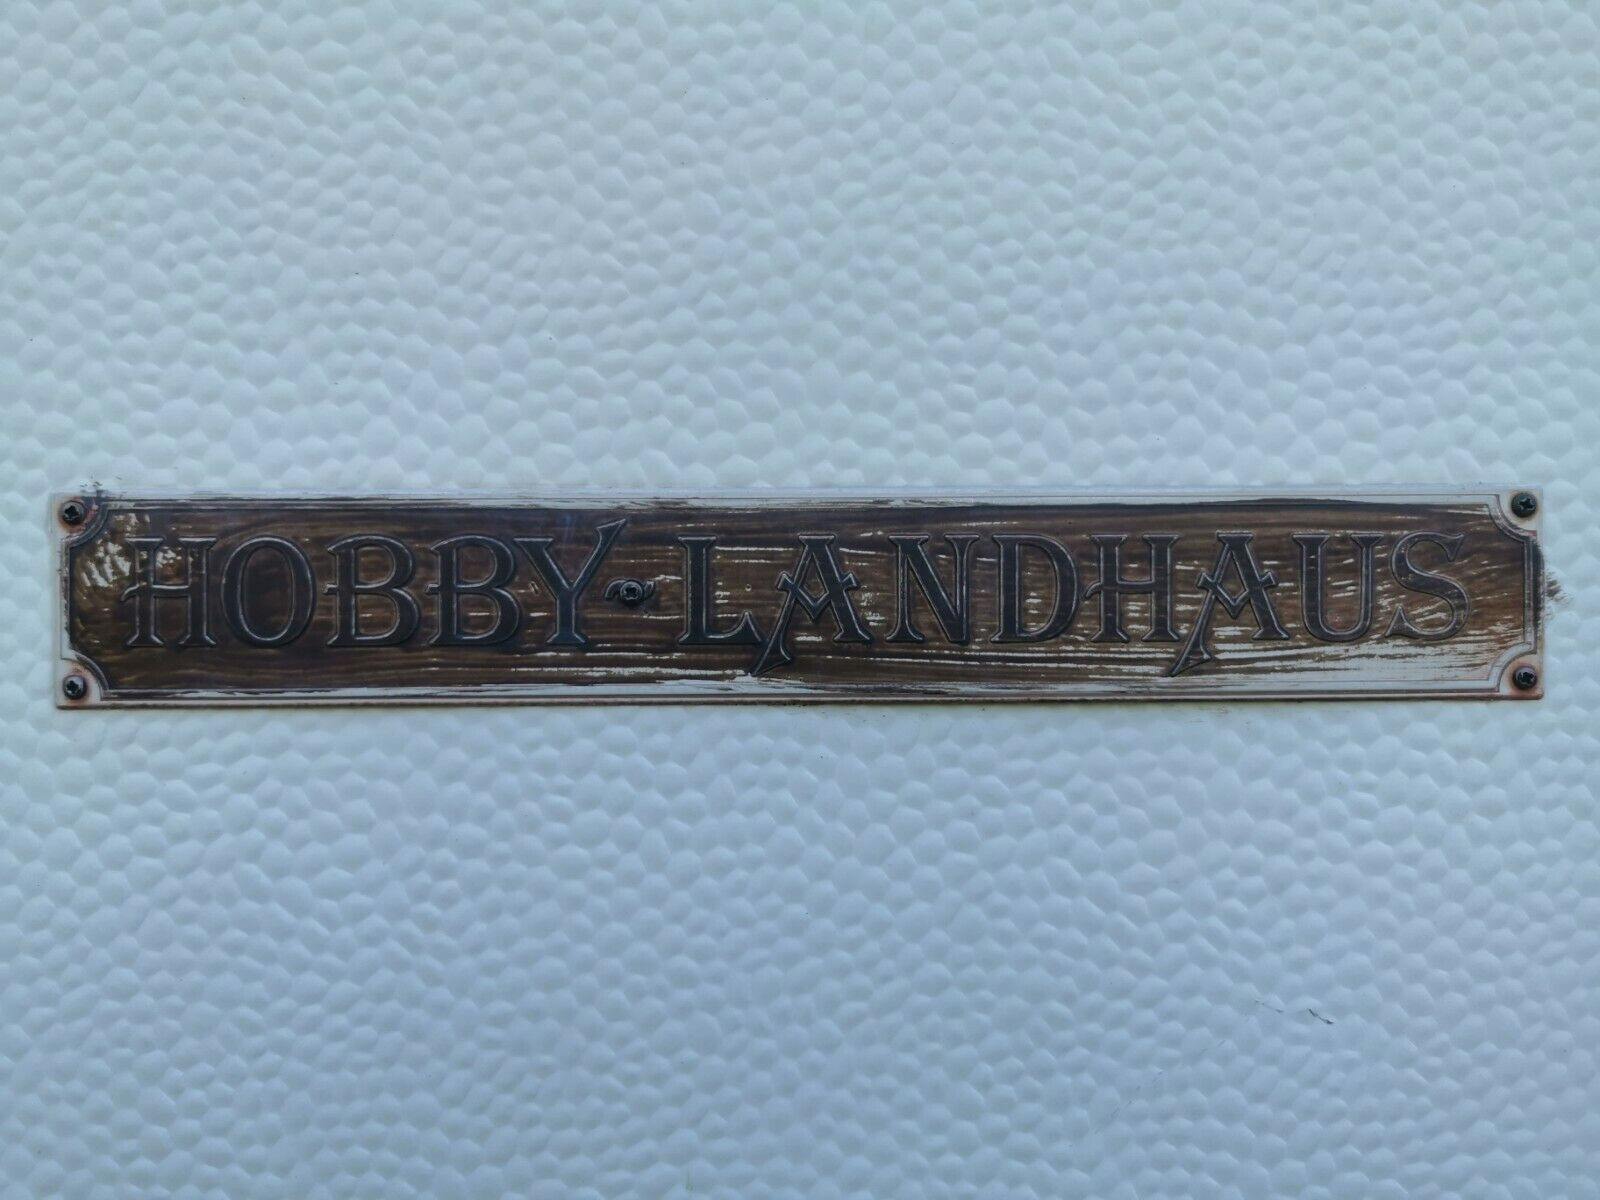 1981 Hobby Landhaus emblem plate